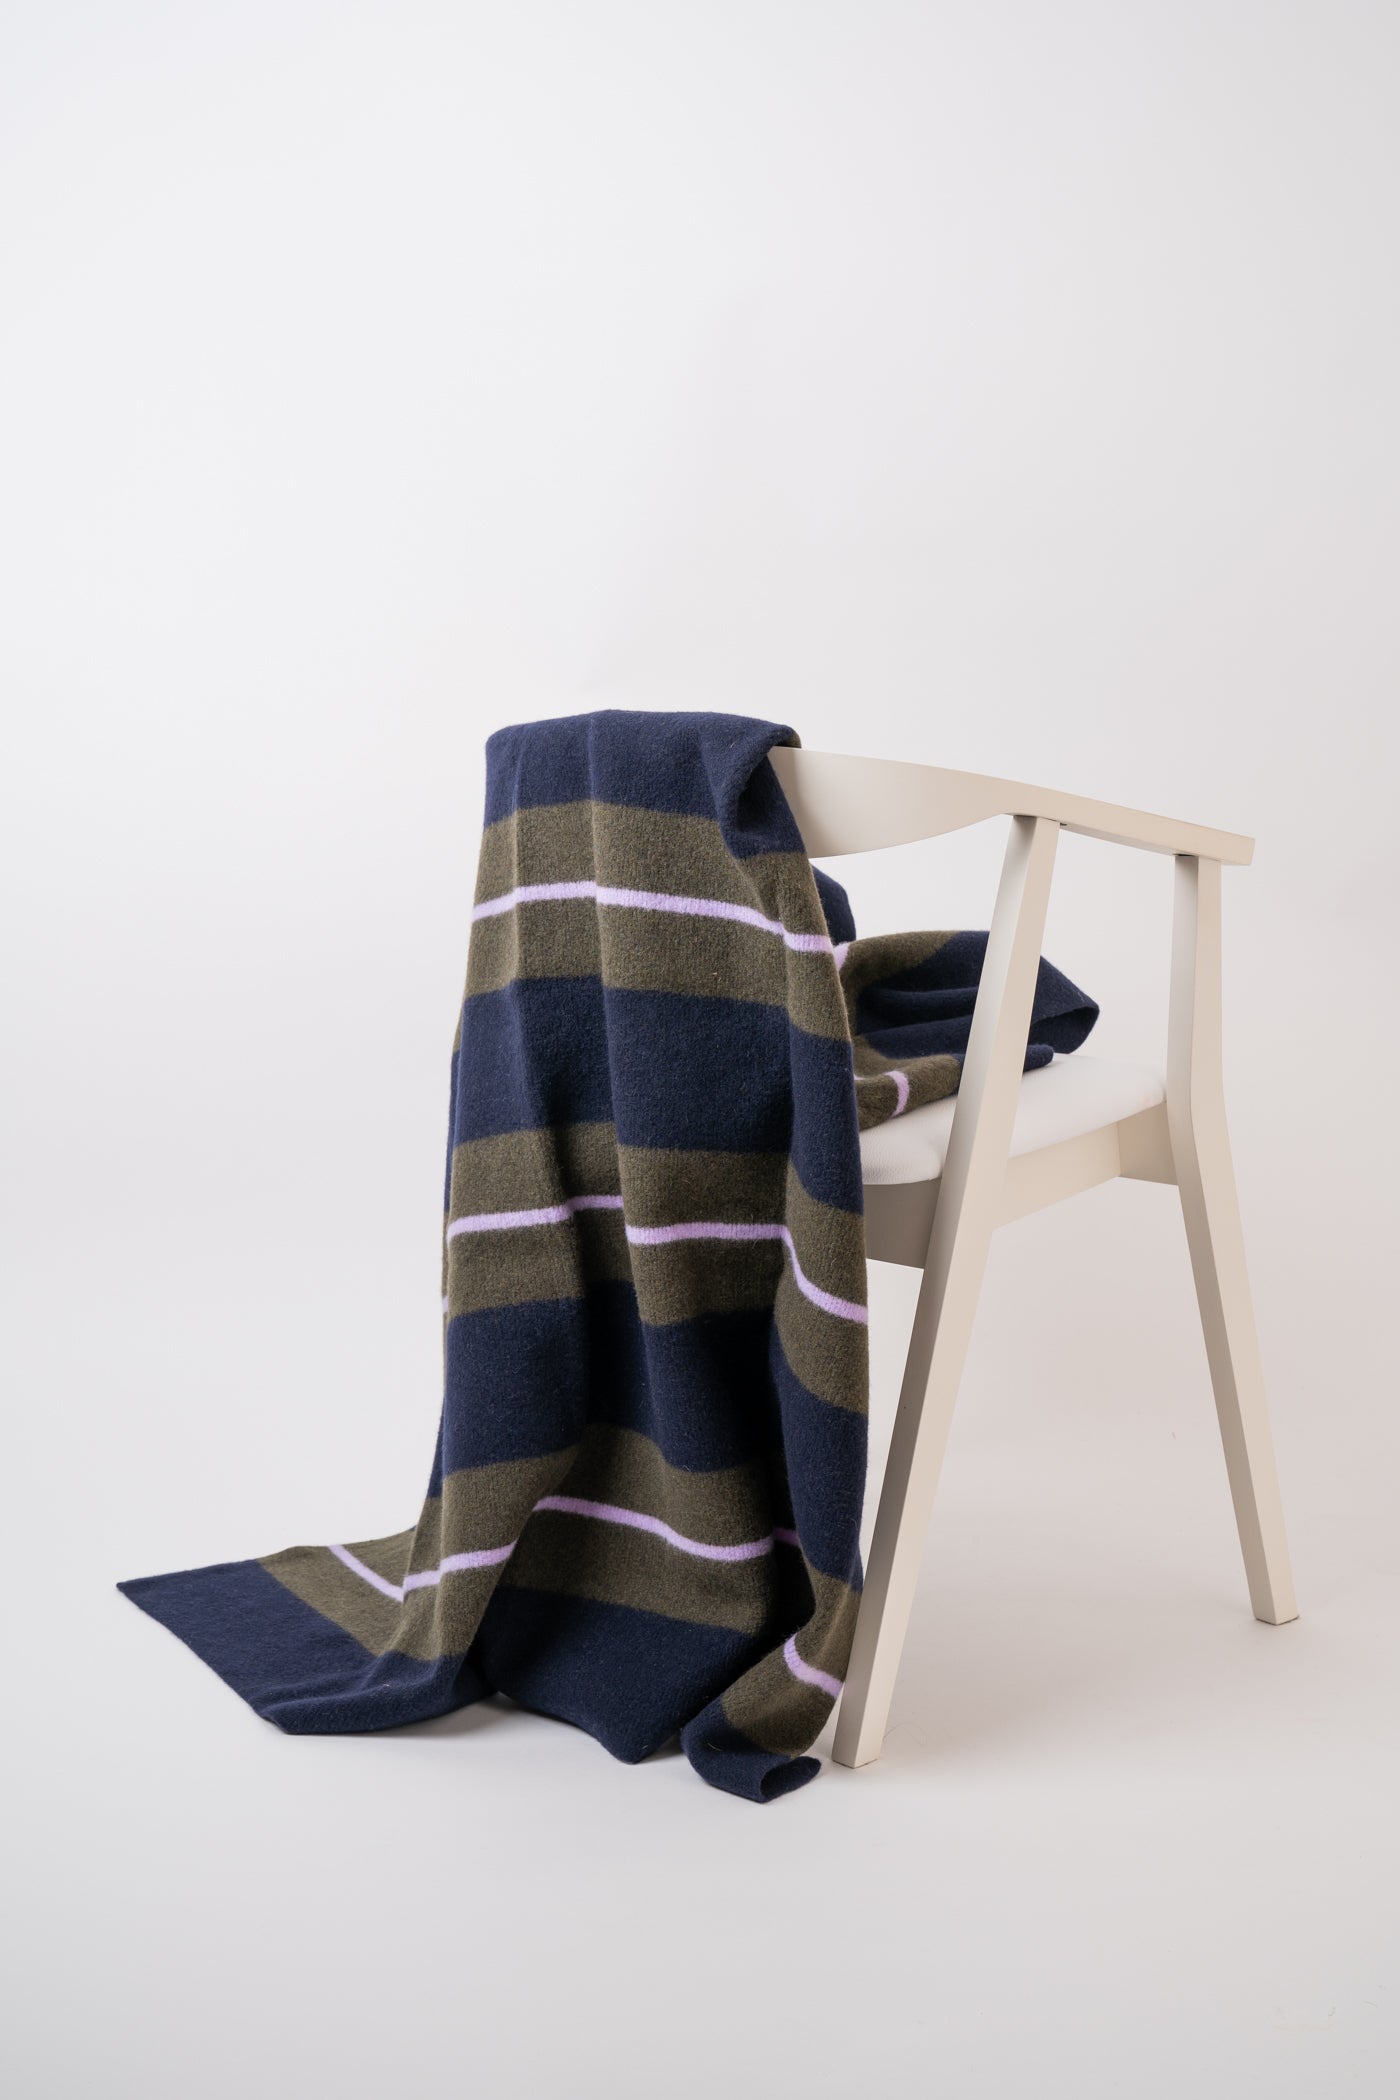 AWL Studio Ellsworth Blanket made from Knitted Deadstock Luxury Yarns